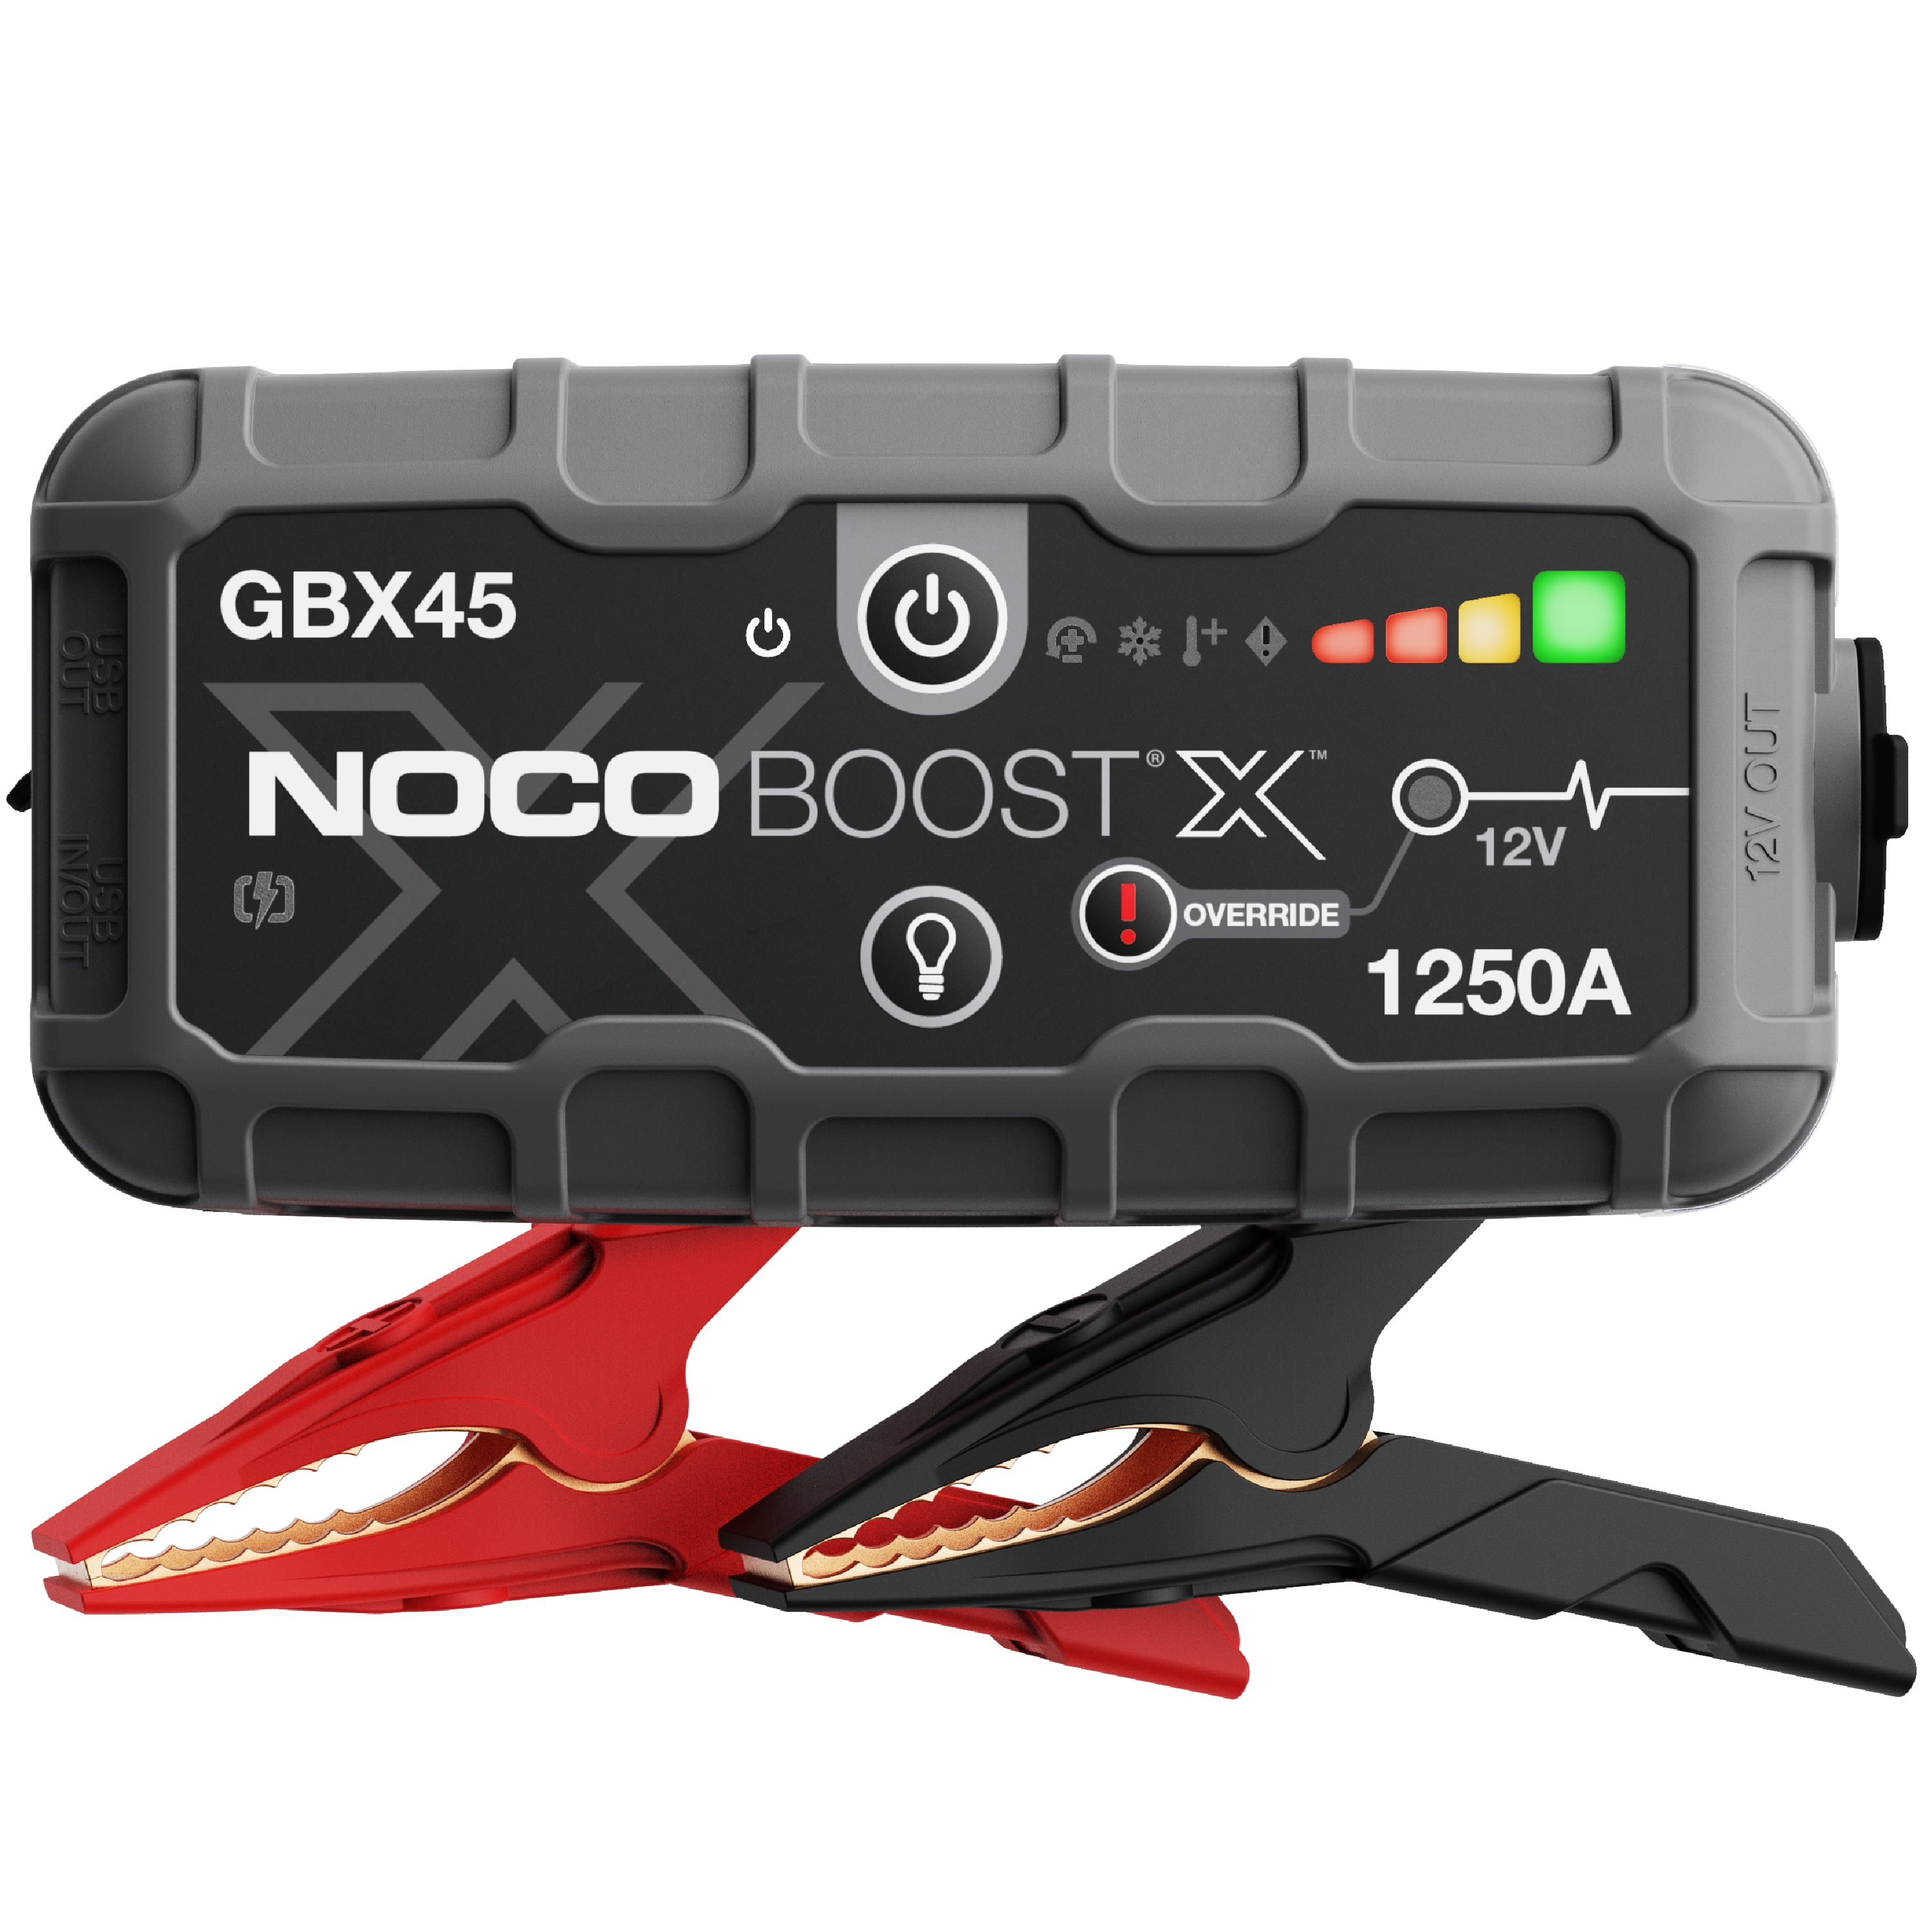 NOCO Boost X GBX45 1250A 12V UltraSafe Portable Lithium Jump